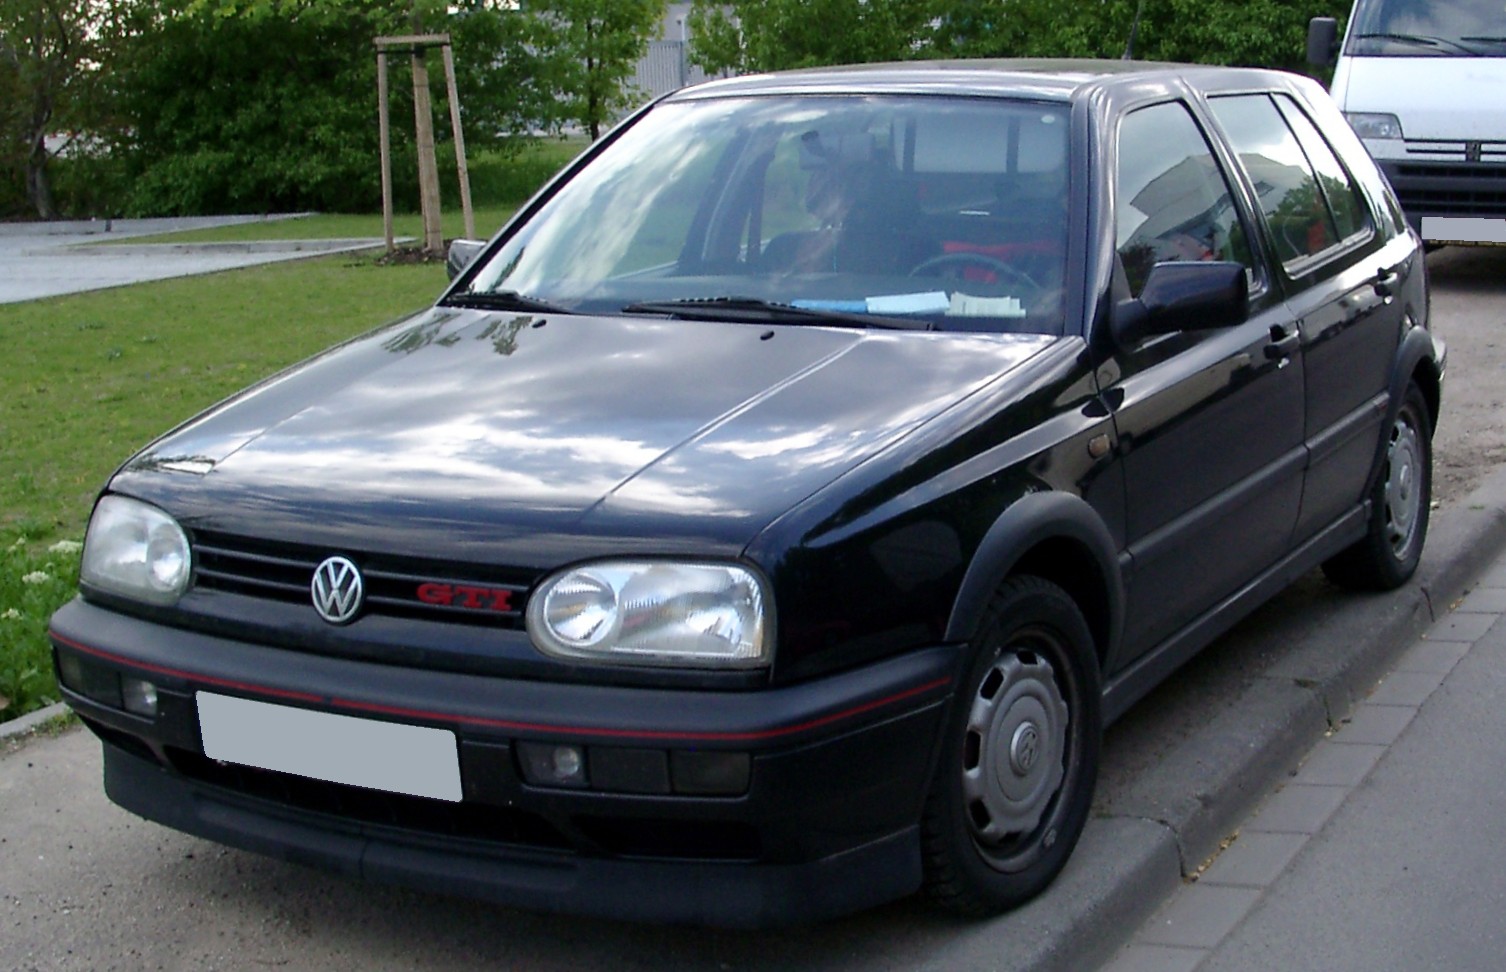 Гольф 3 минск. Фольксваген Golf 3. VW Golf 3 GTI. Volkswagen VW Golf III (1991-2000). Volkswagen Golf GTI III.